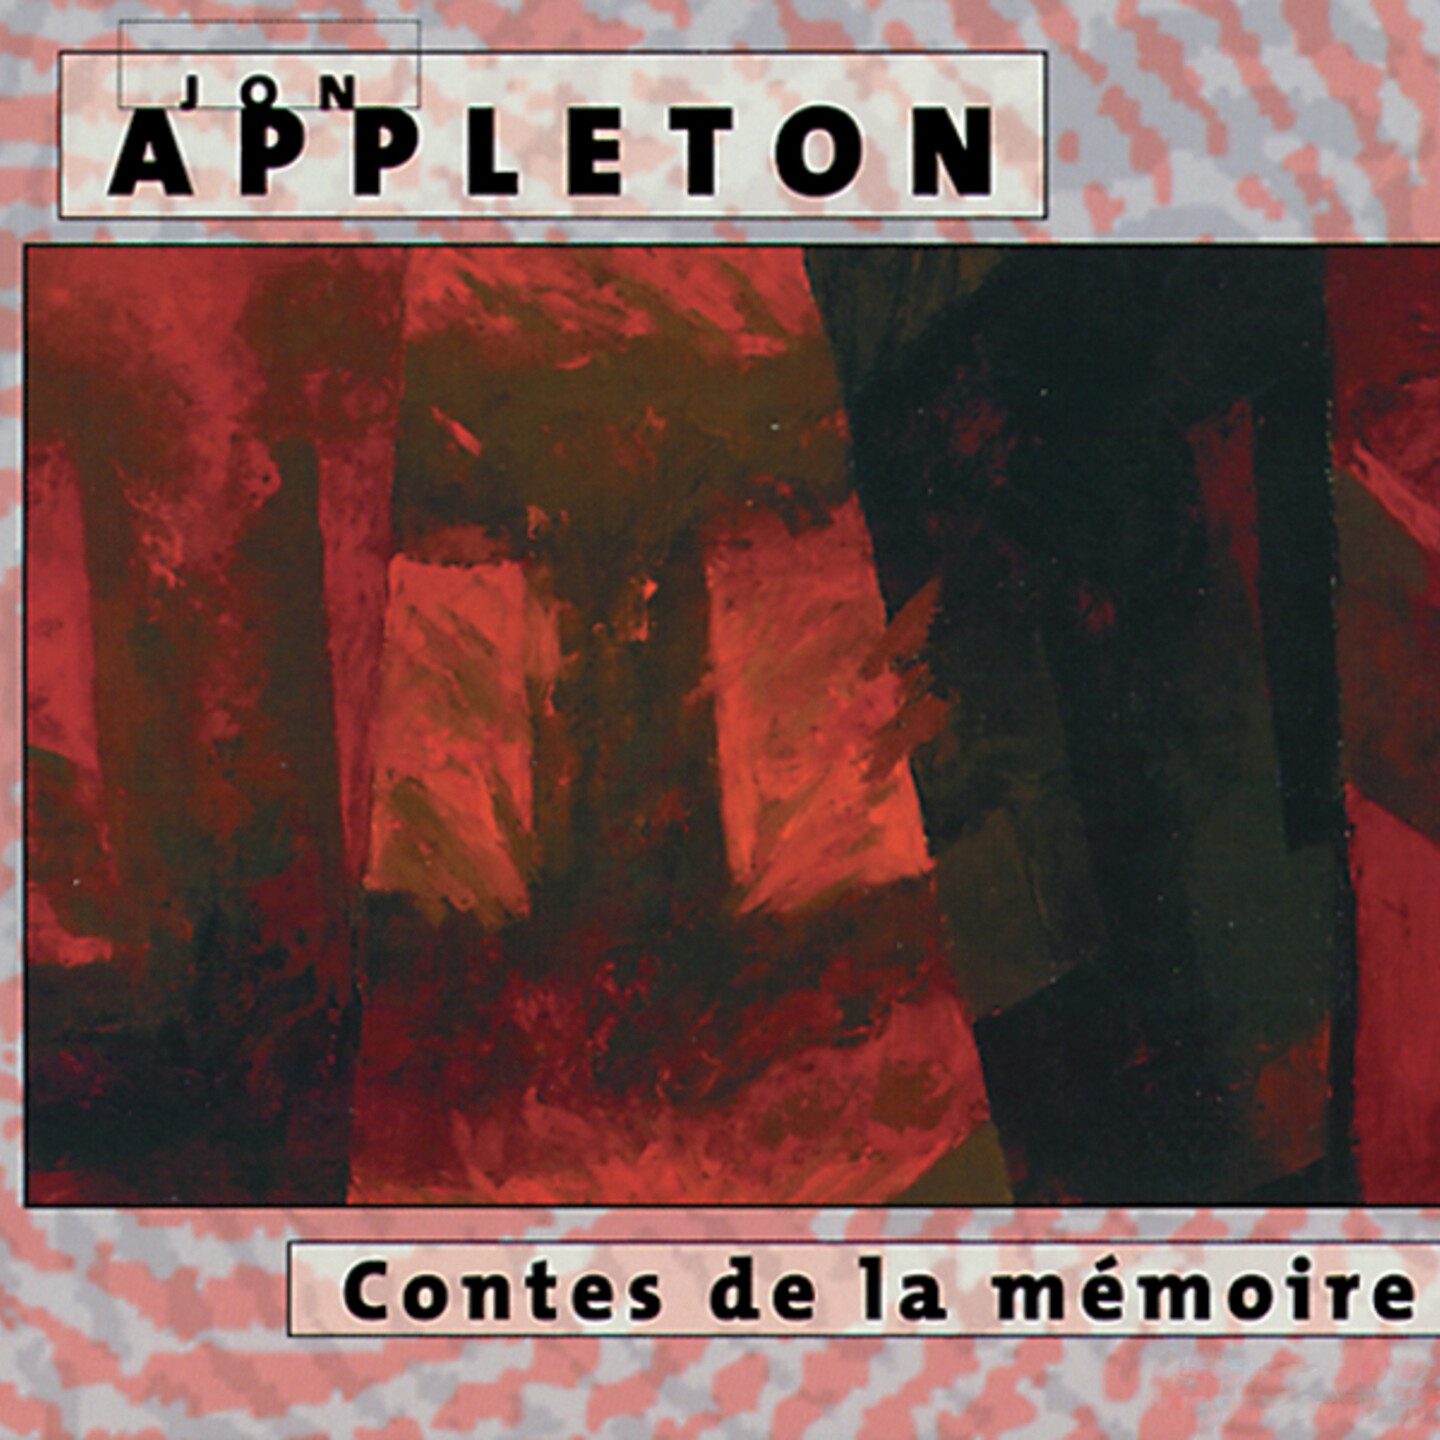 Contes de la mémoire — Jon Appleton — empreintes DIGITALes